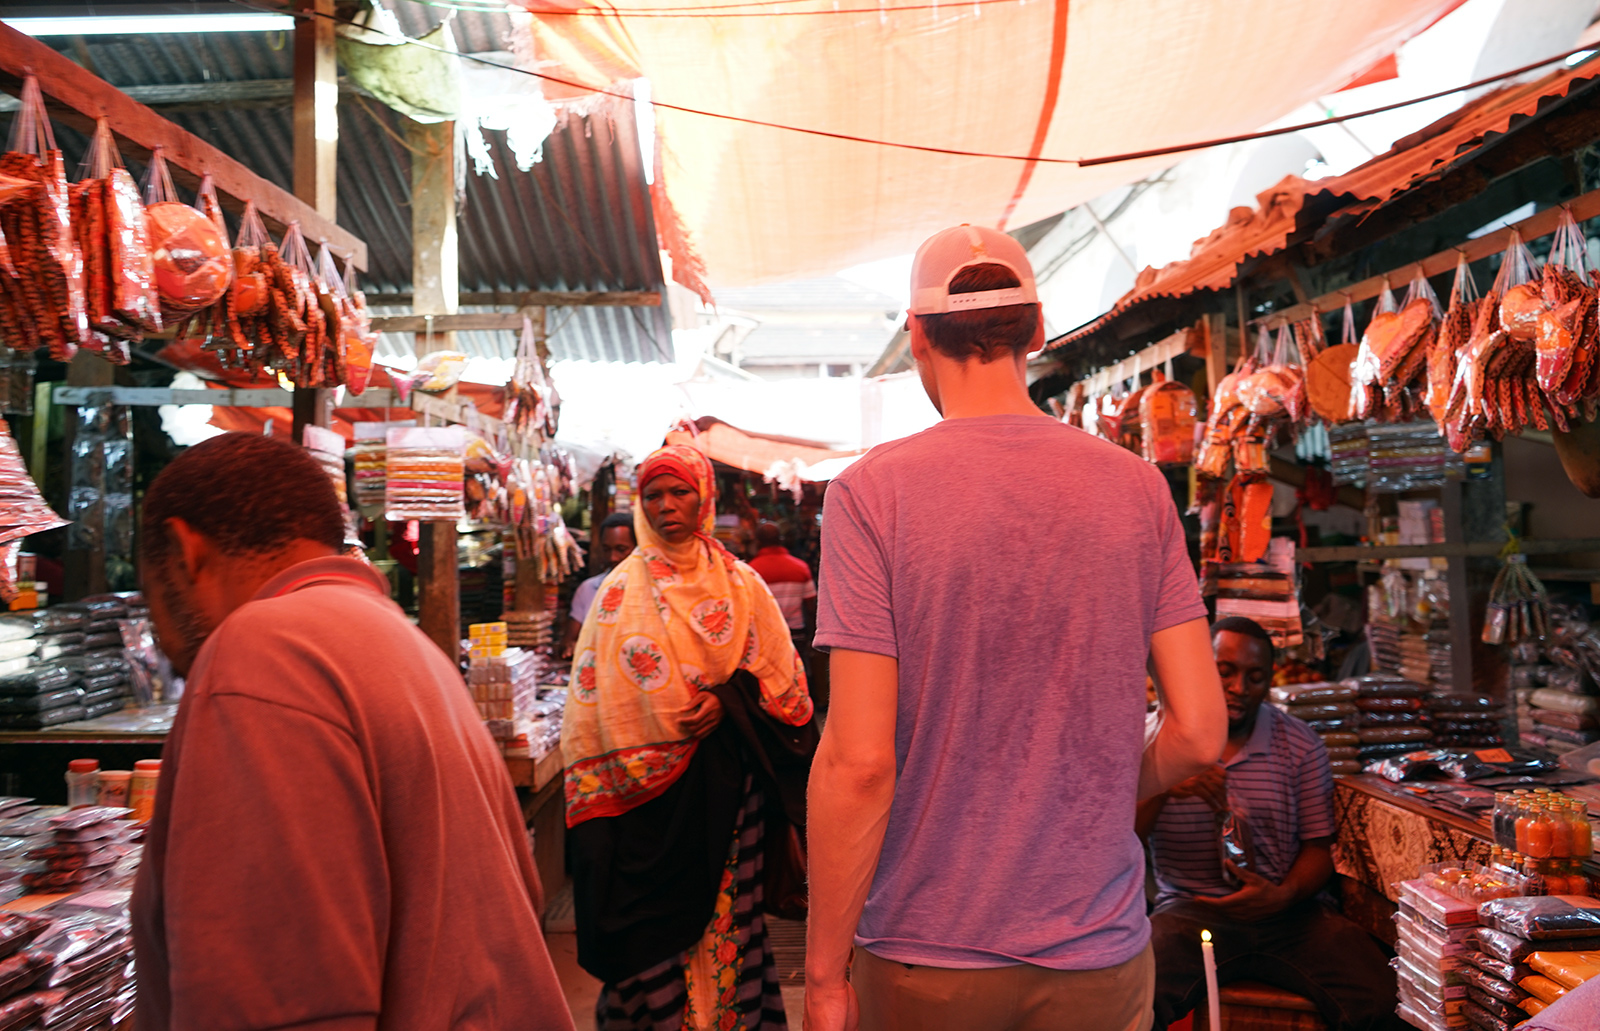 Bustling spice market in Zanzibar